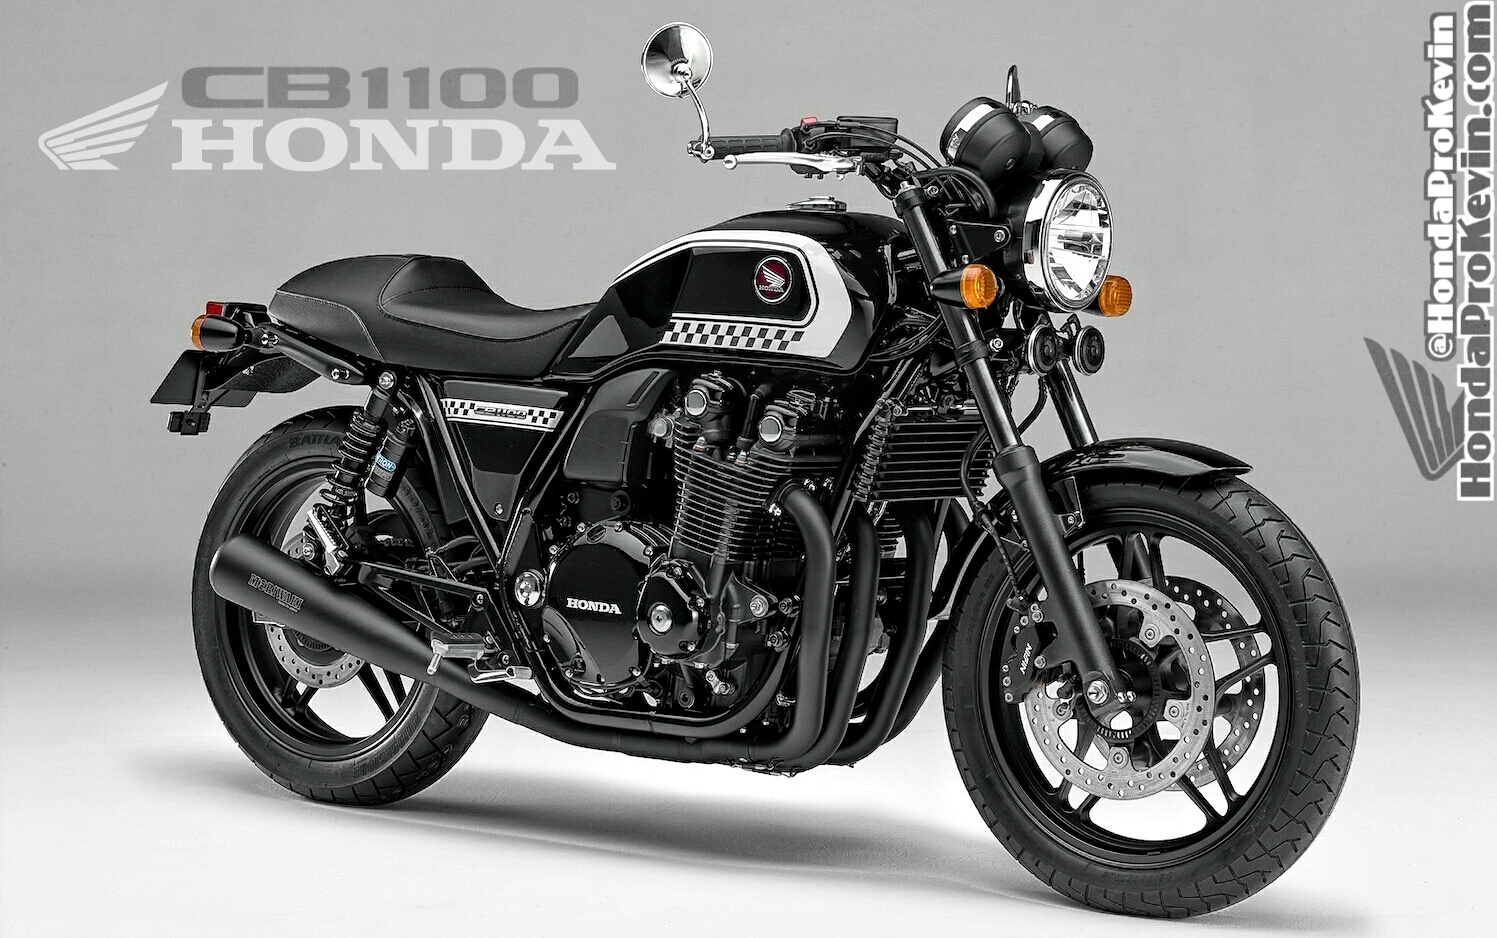 Honda CB1100 High Quality Background on Wallpapers Vista